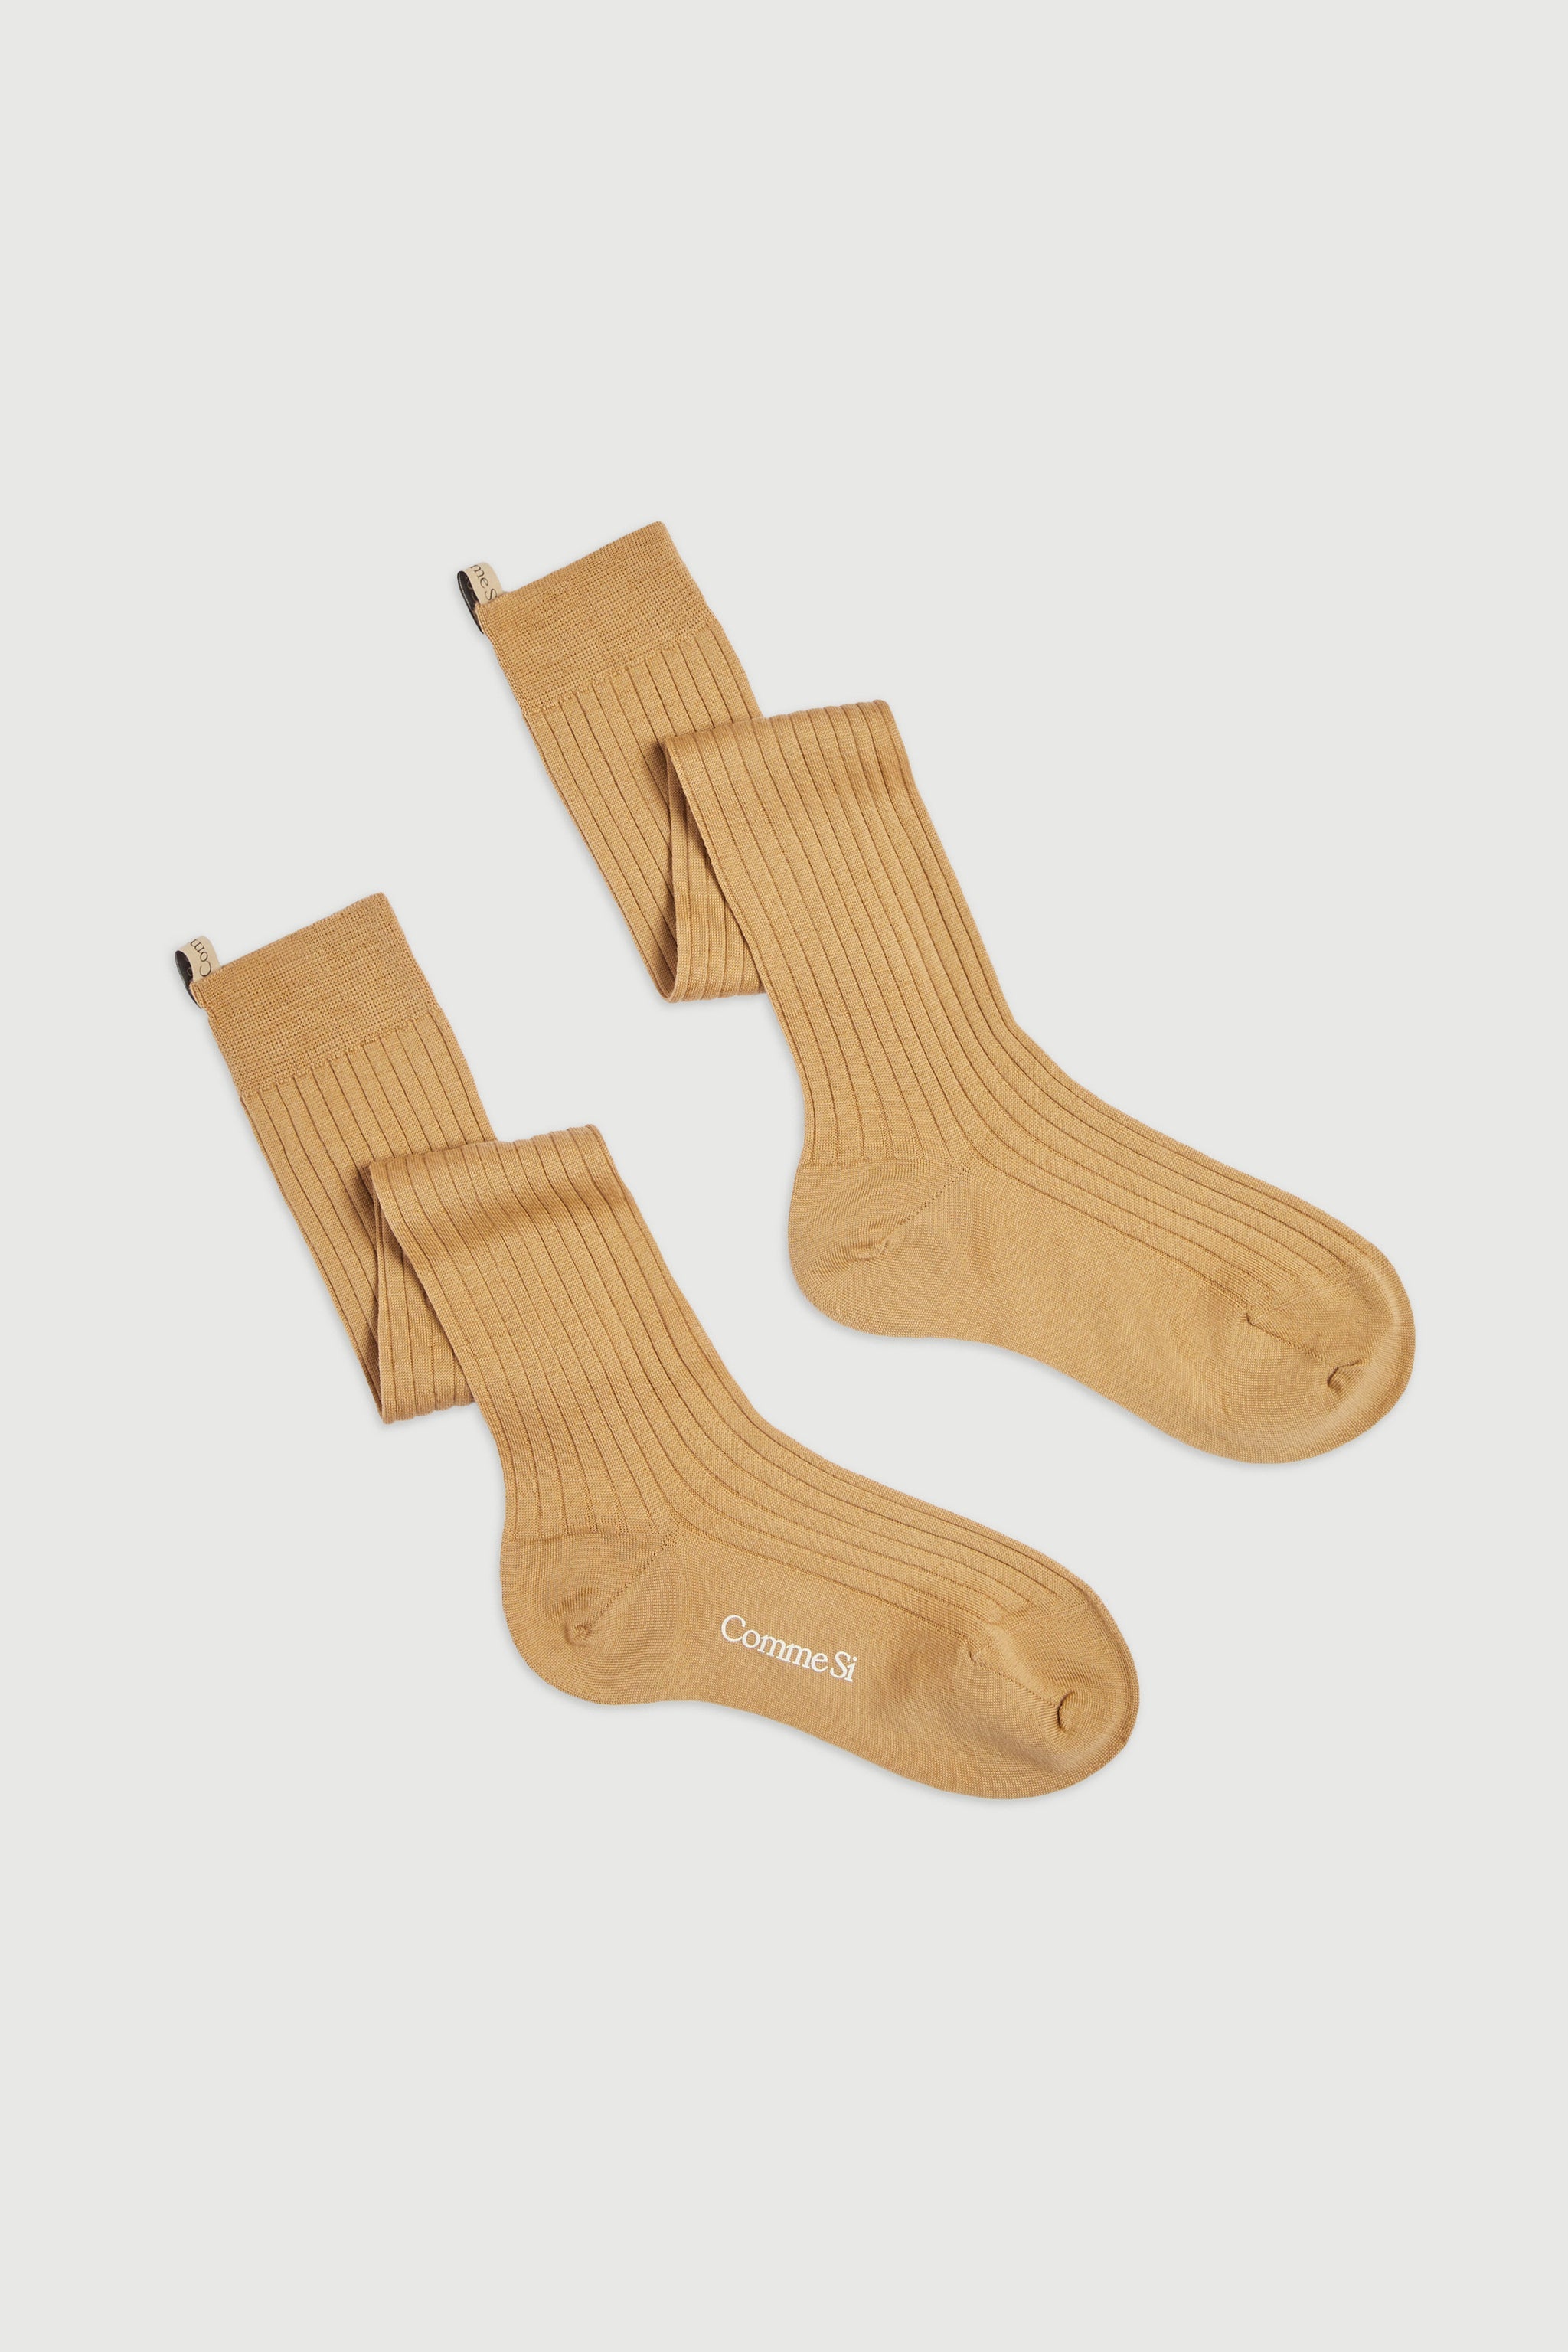 The Merino Sock – Comme Si